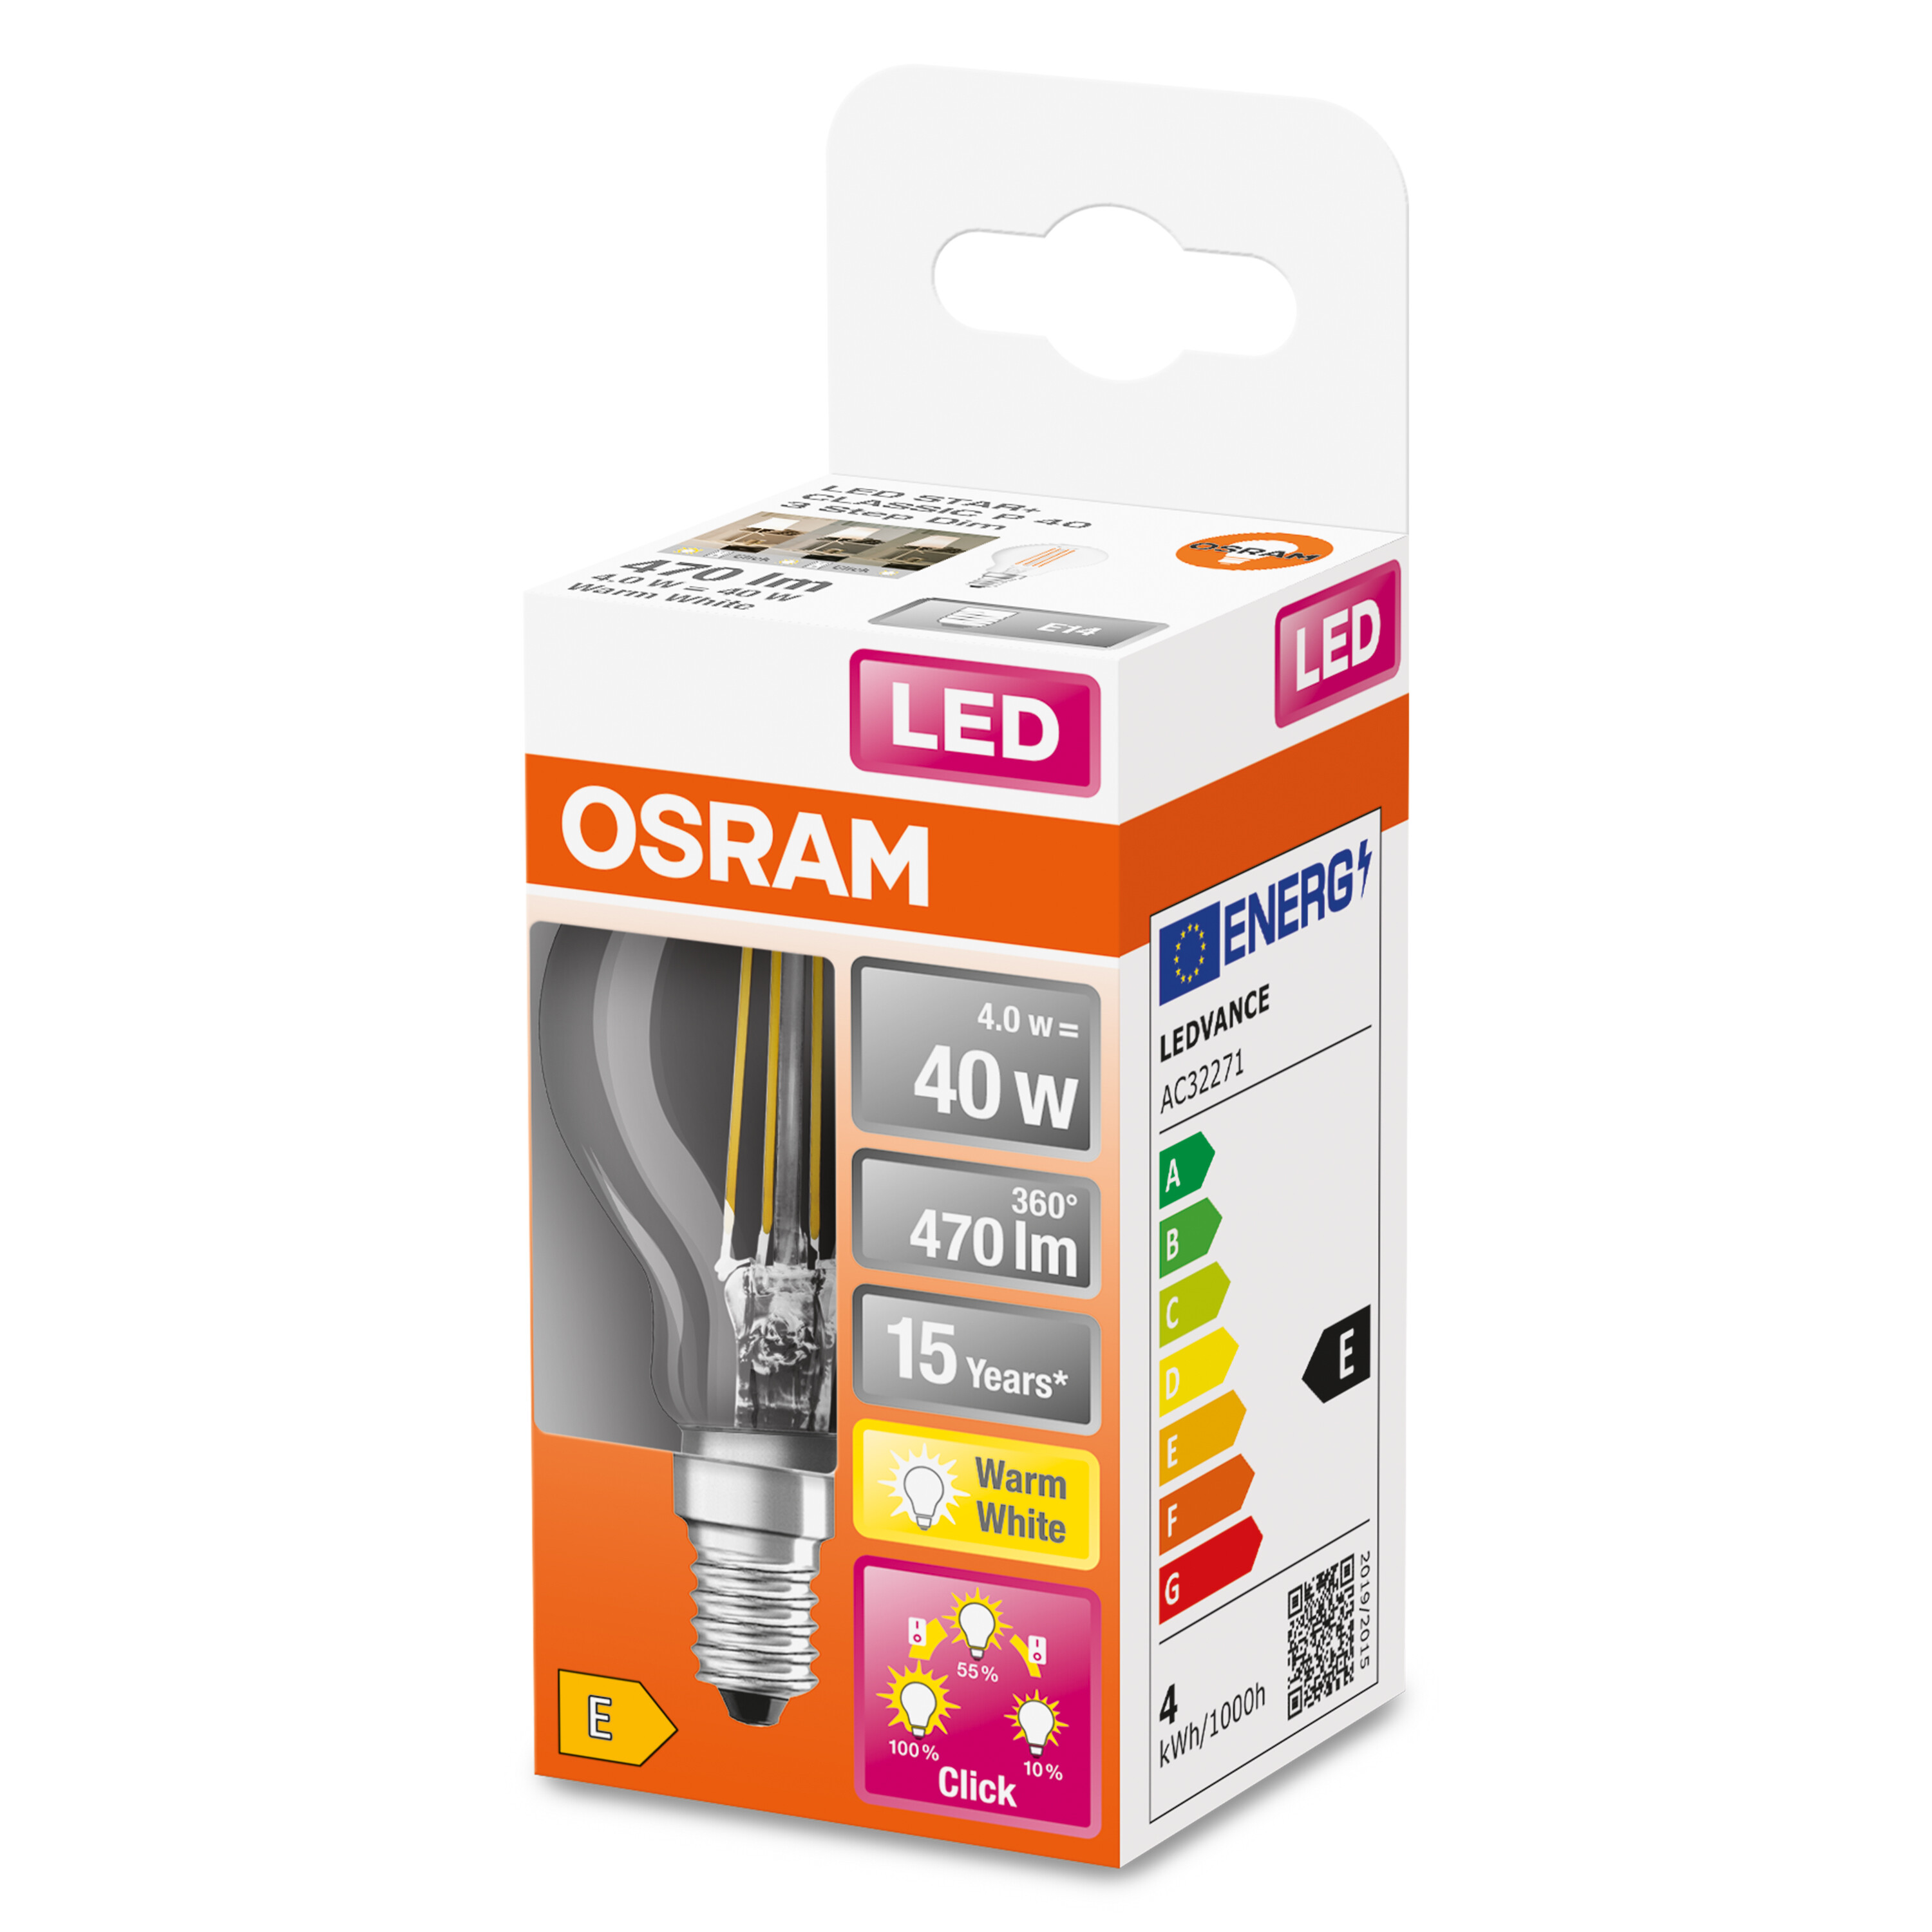 OSRAM  LED THREE STEP LED DIM CLASSIC Lumen 470 Lampe P Warmweiß